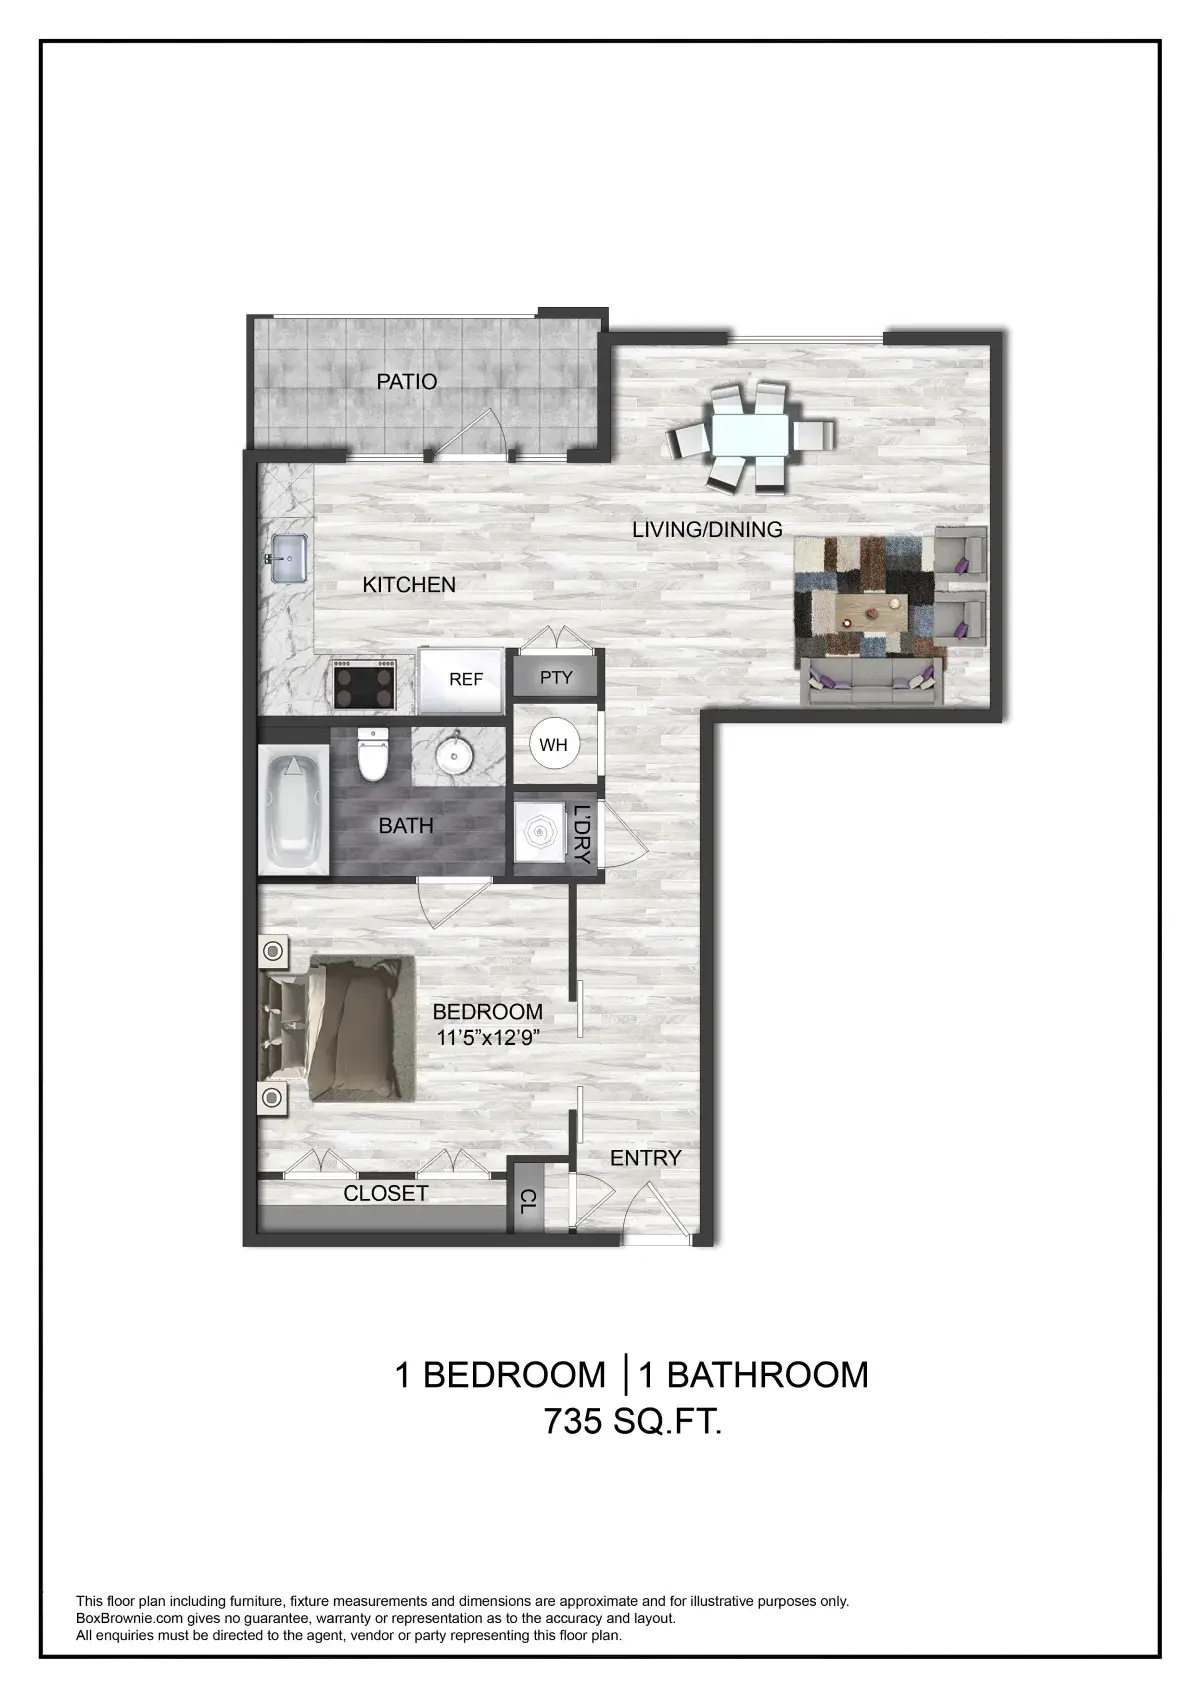 Sinclair houston apartment floorplan 3